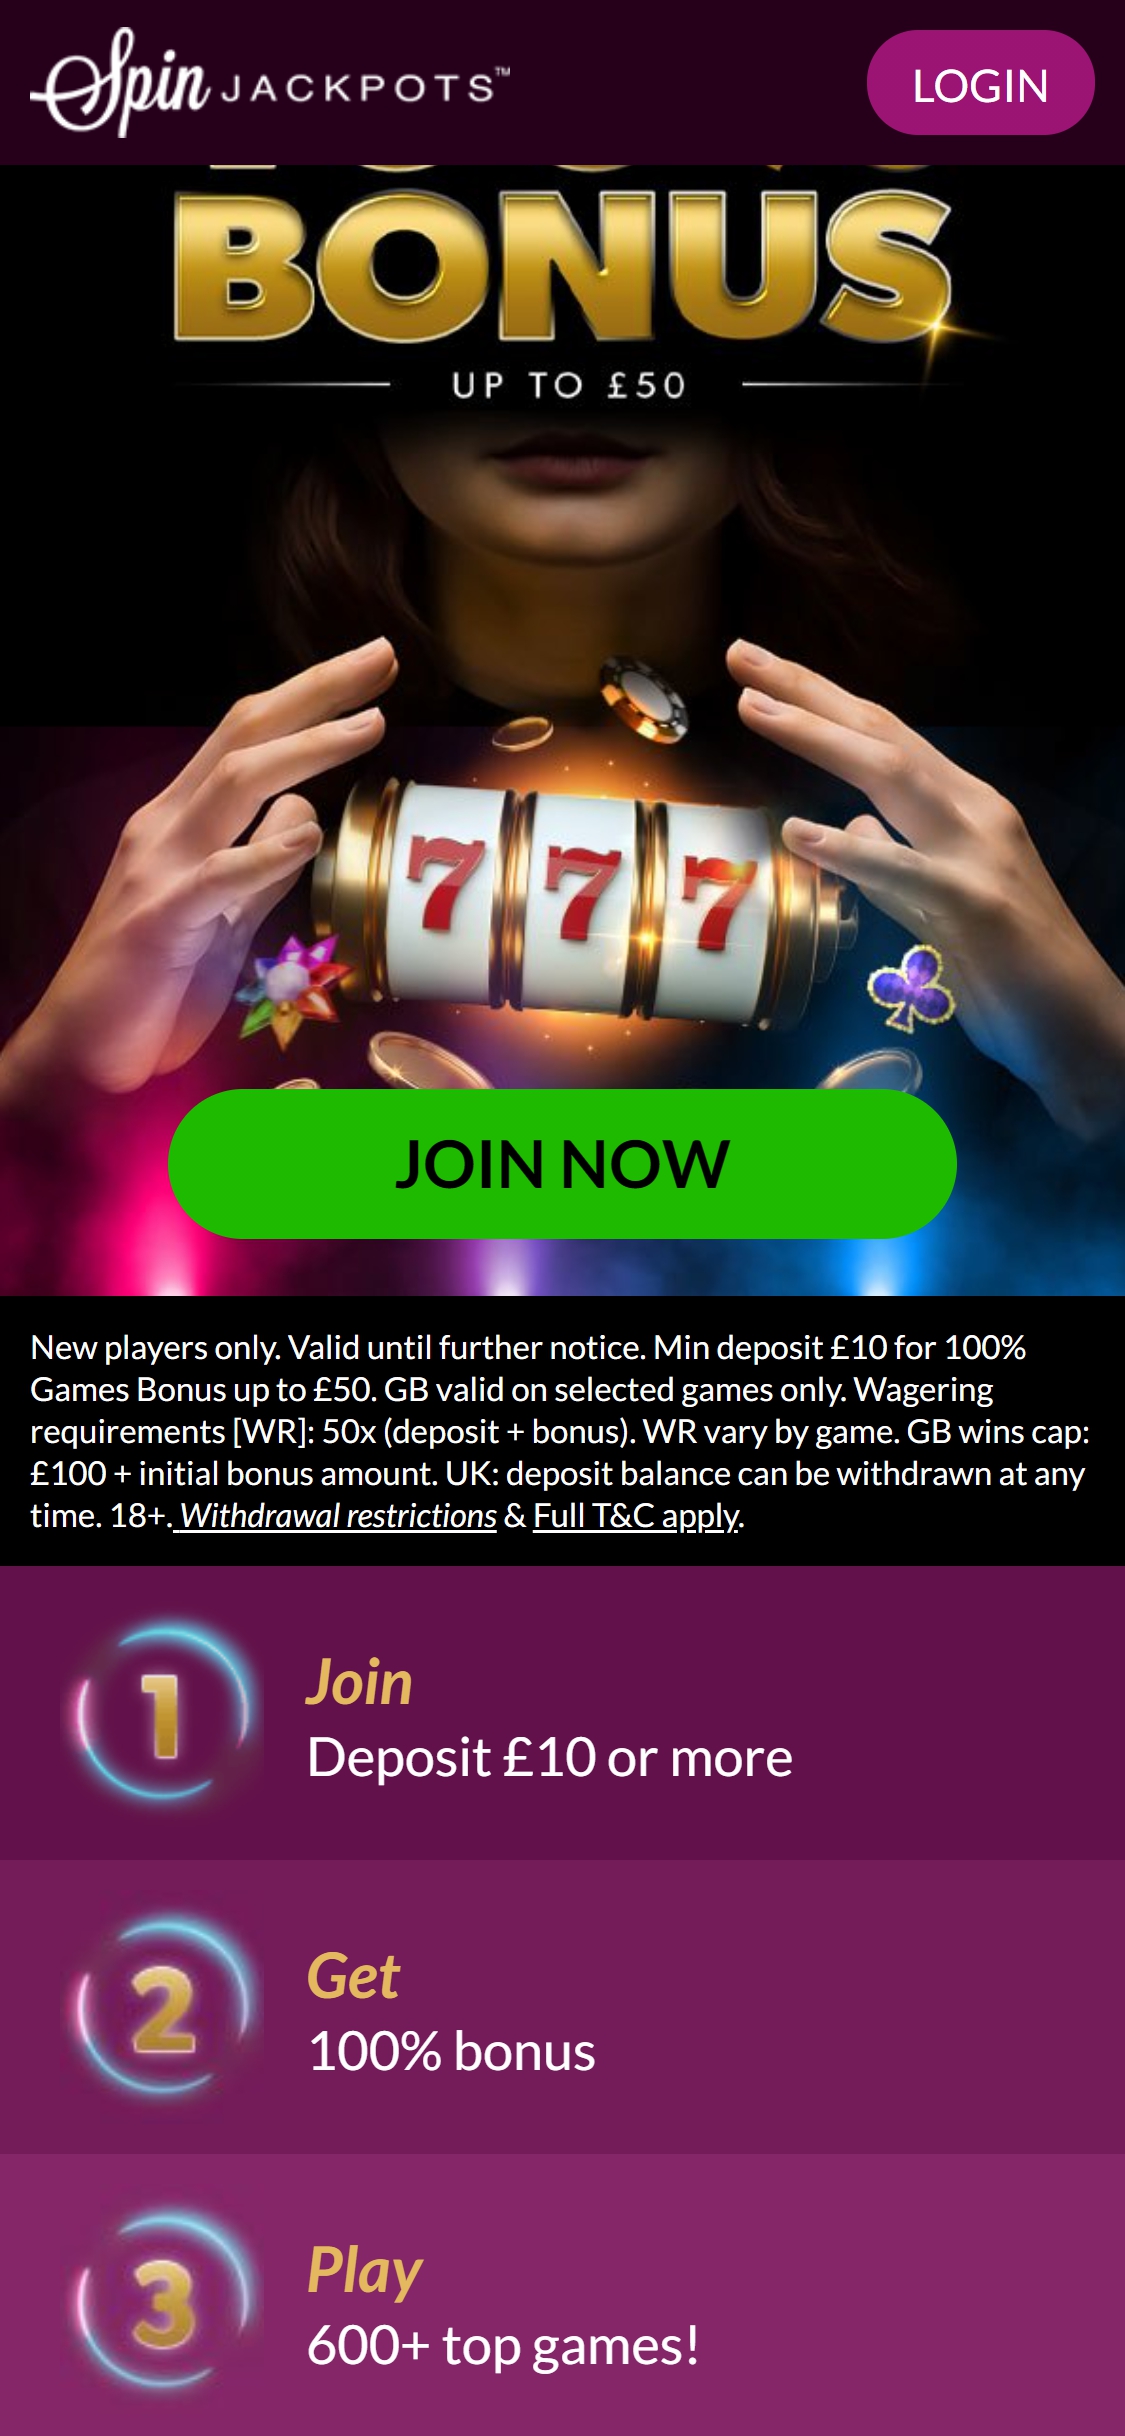 Spin Jackpots Casino Mobile No Deposit Bonus Review